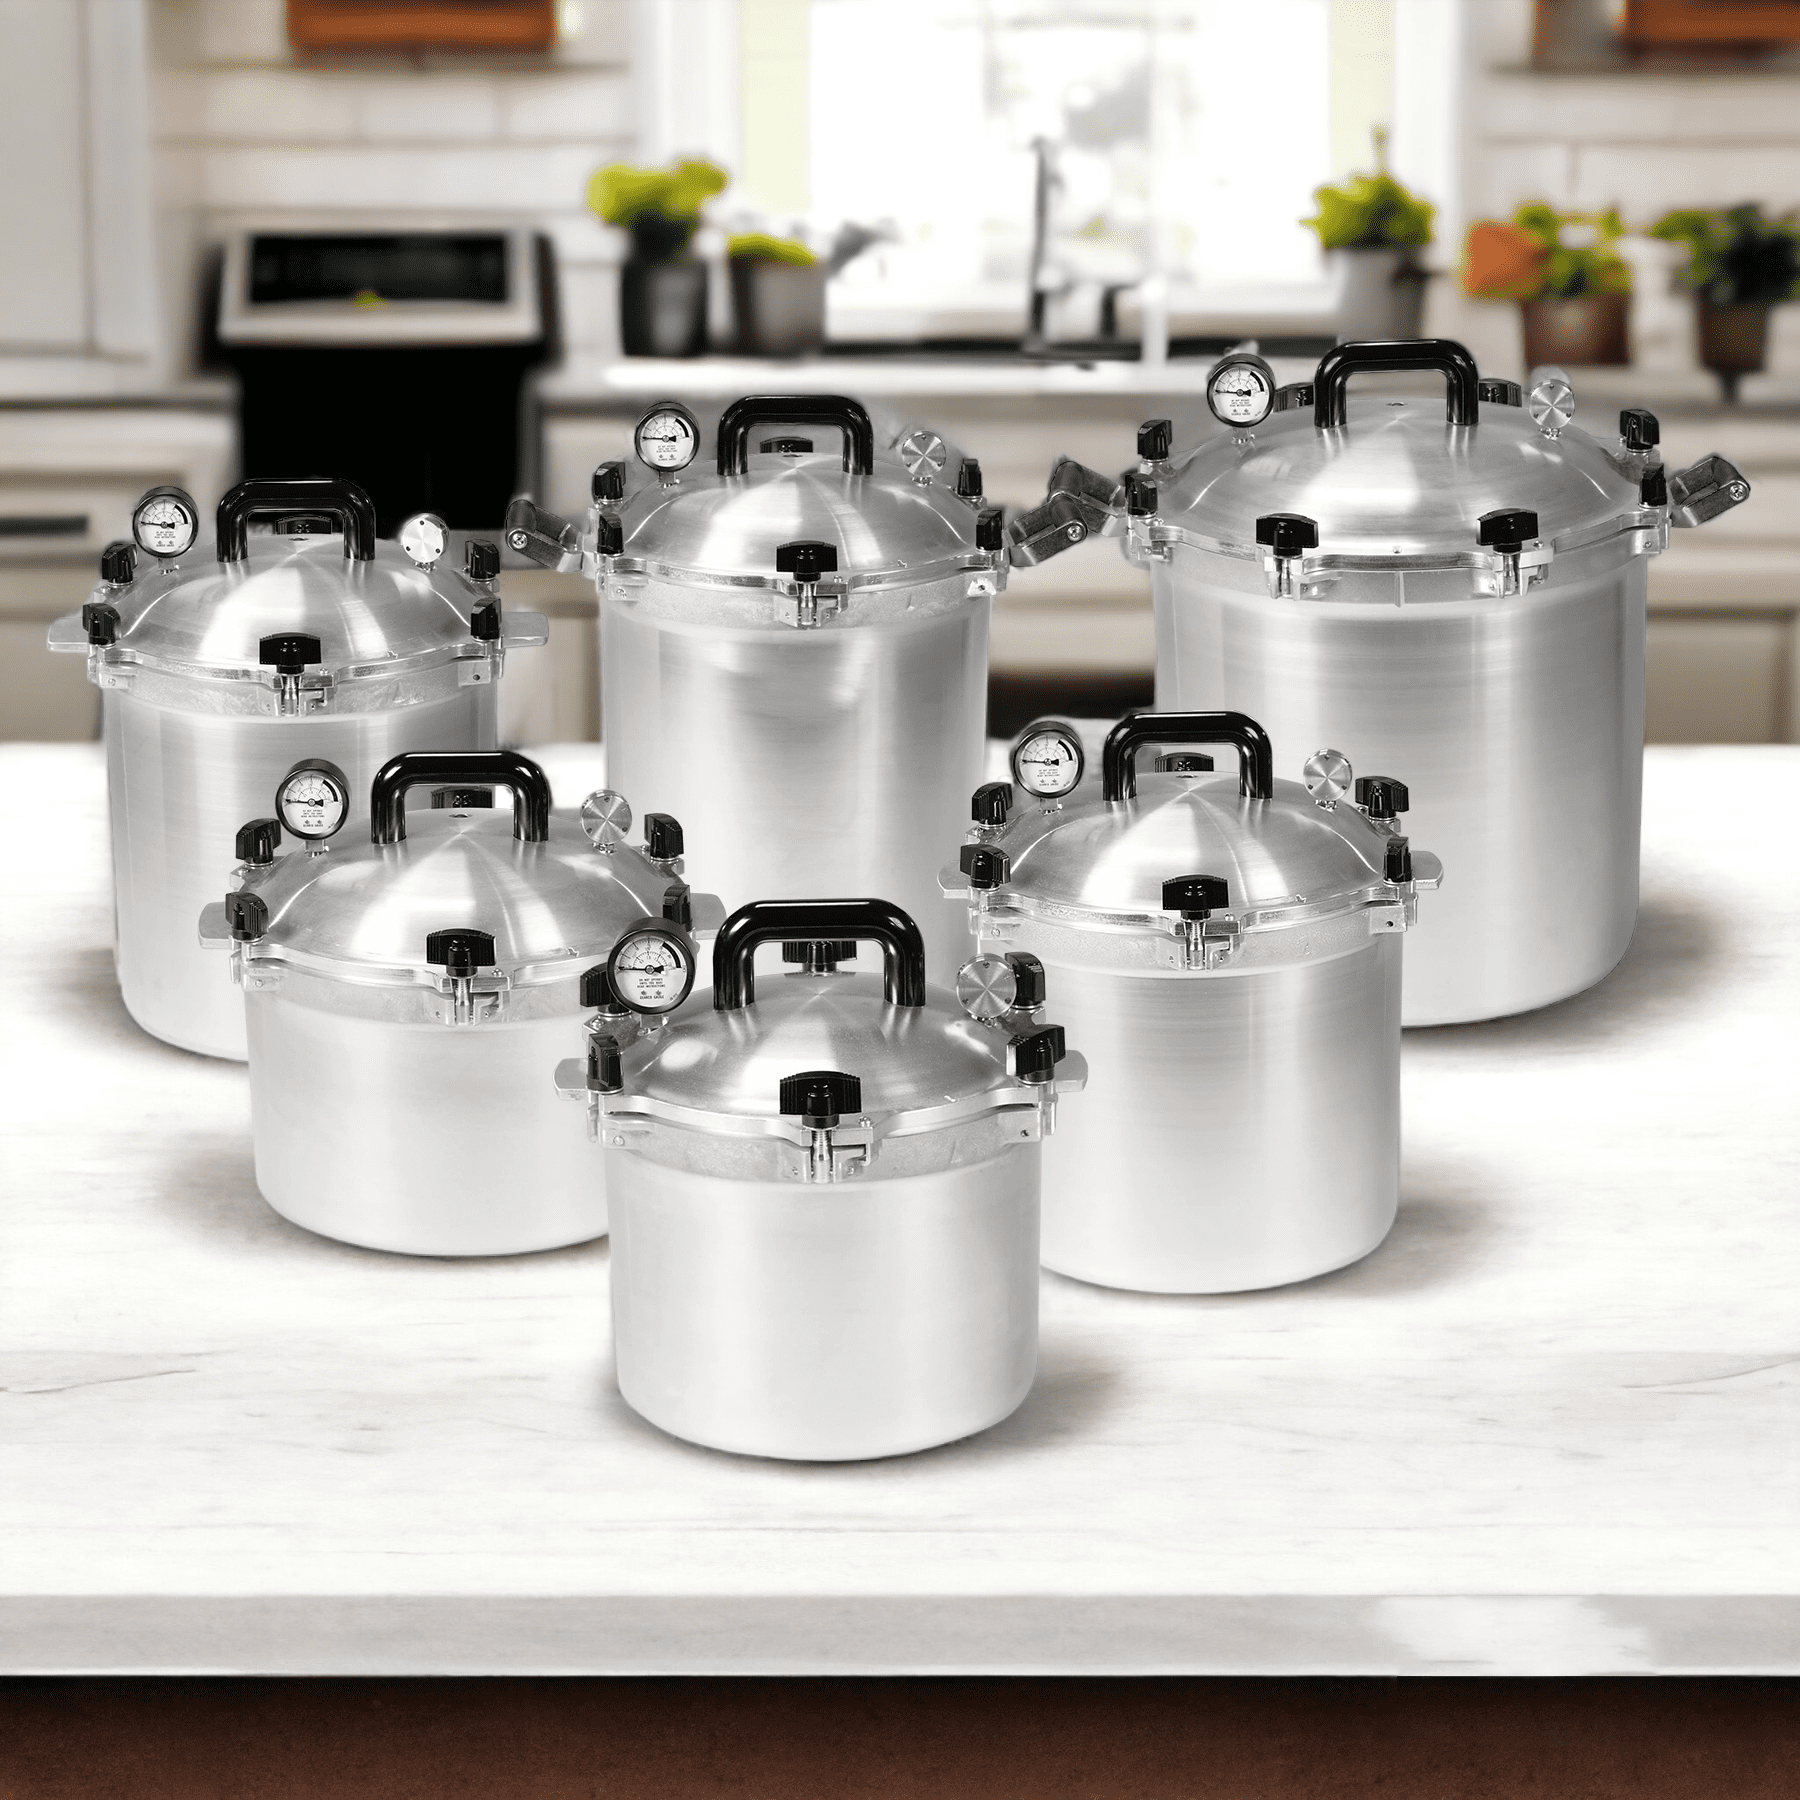 All-American Pressure Canner/Cooker, Model 925 - 25 quart